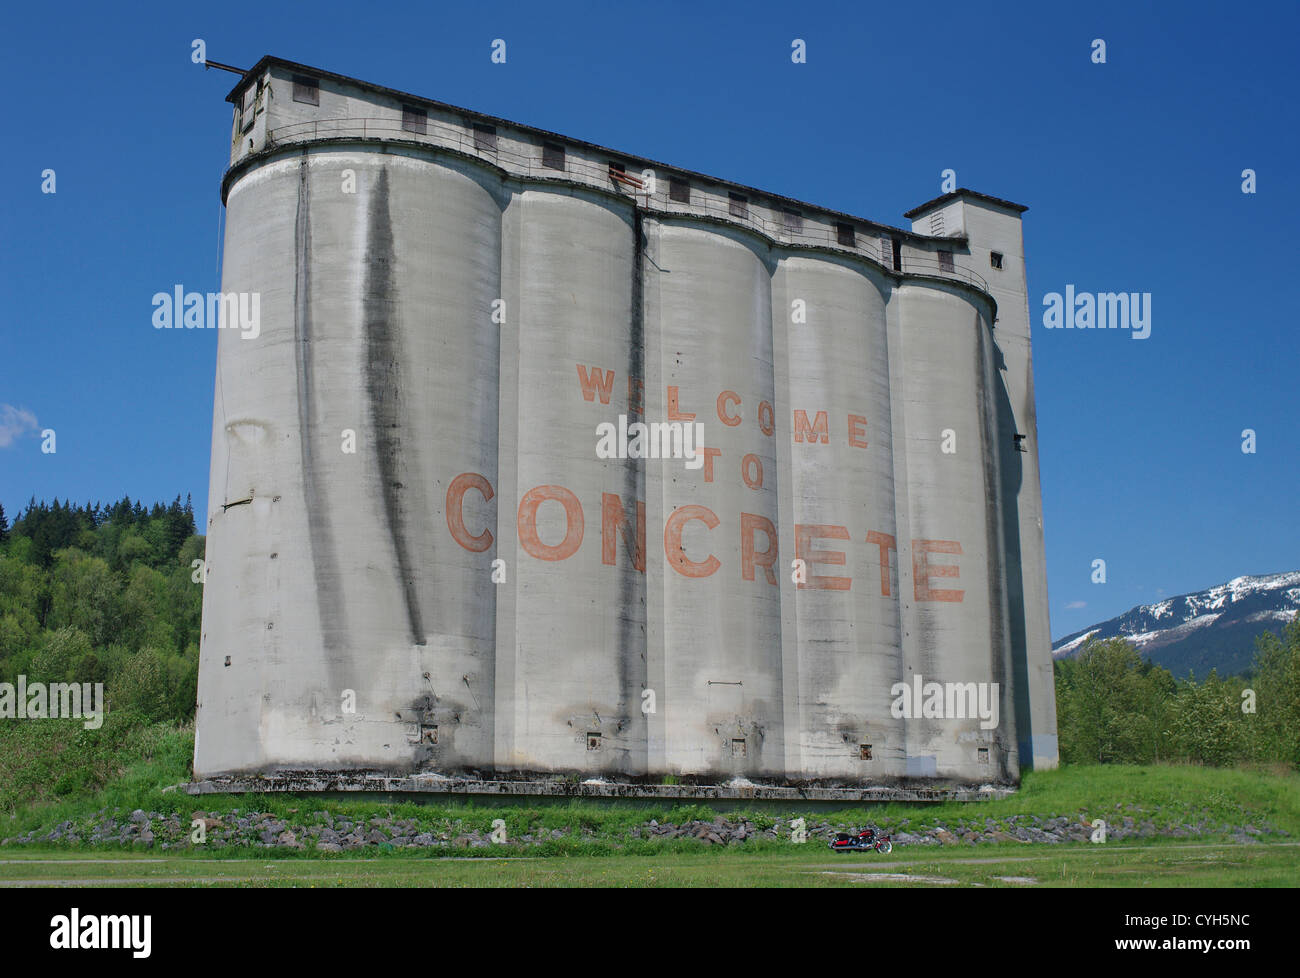 A motorcycle is dwarfed by the giant concrete grain silos of Concrete, Washington, USA. Stock Photo